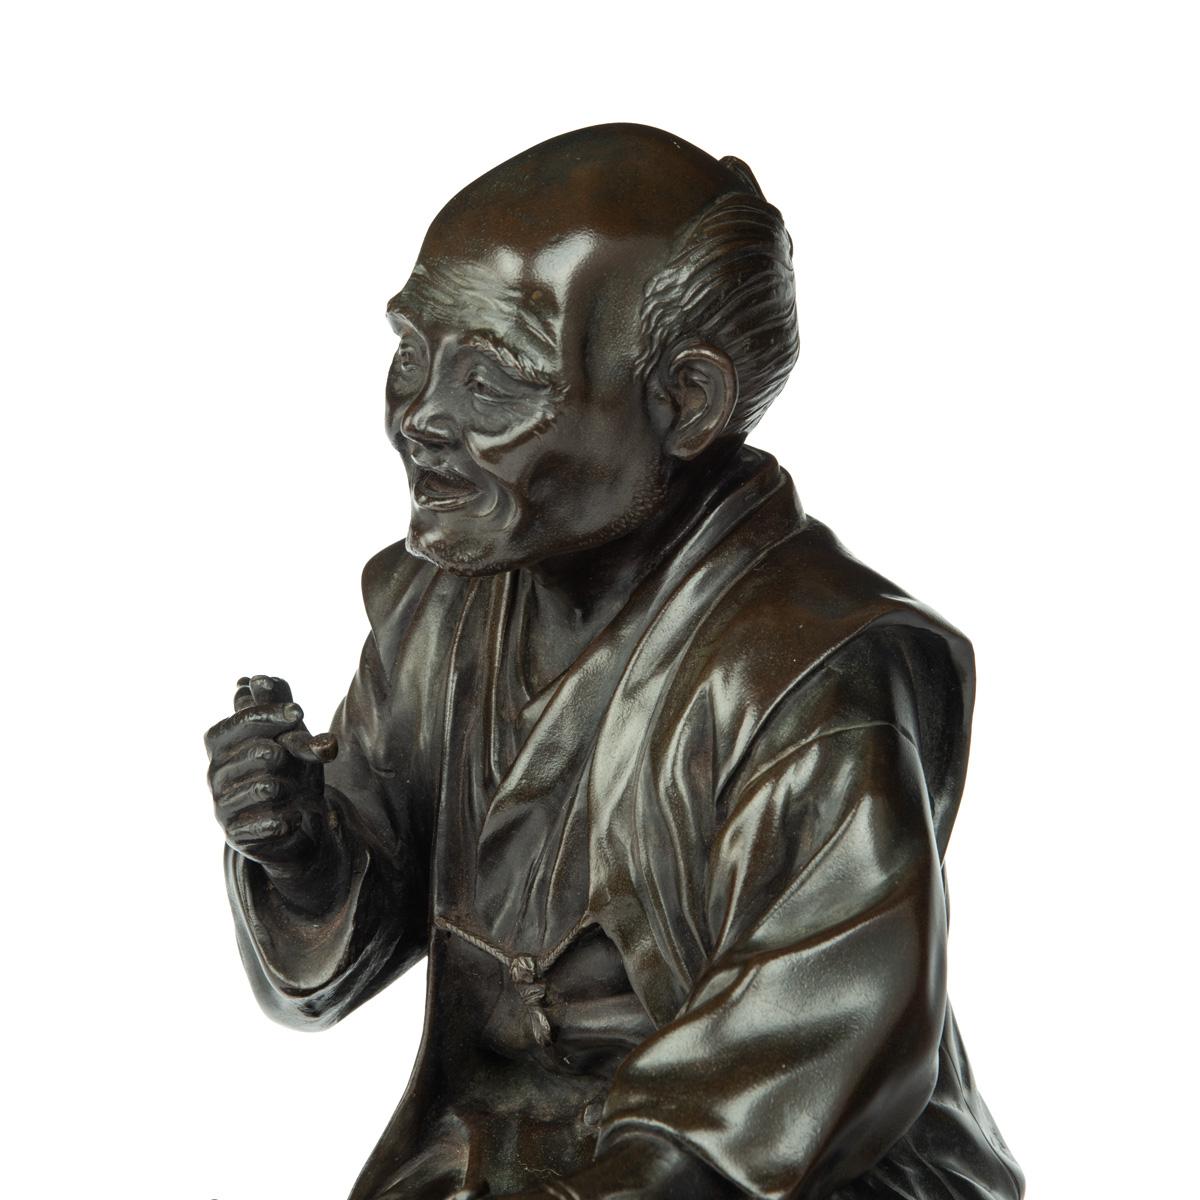 Meiji period bronze of a seated man smoking